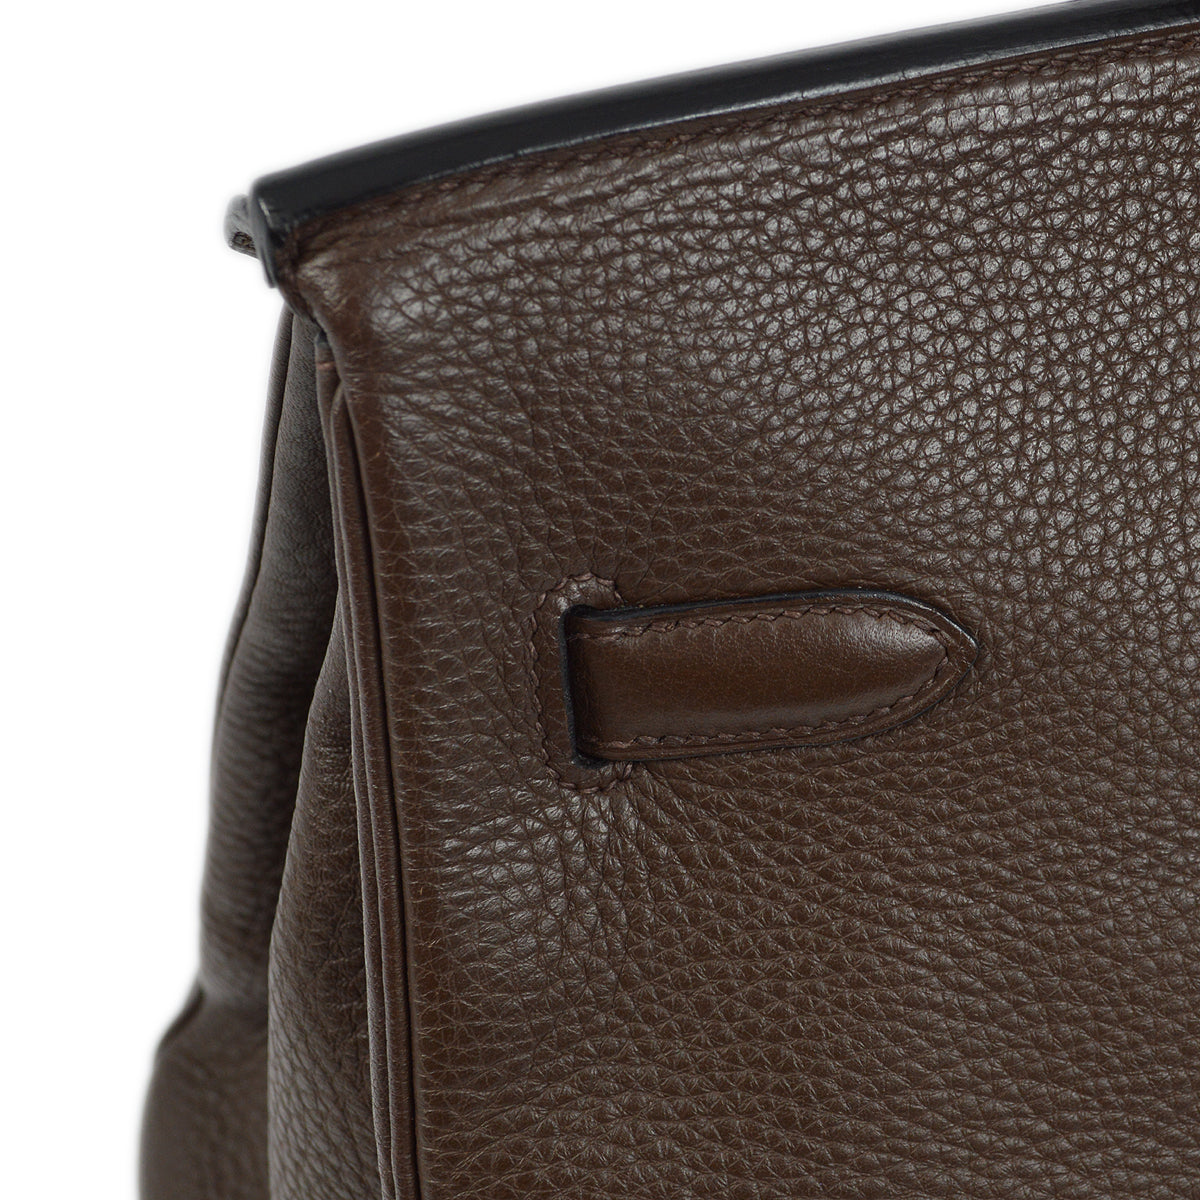 Hermes Brown Taurillon Clemence Birkin 35 Handbag